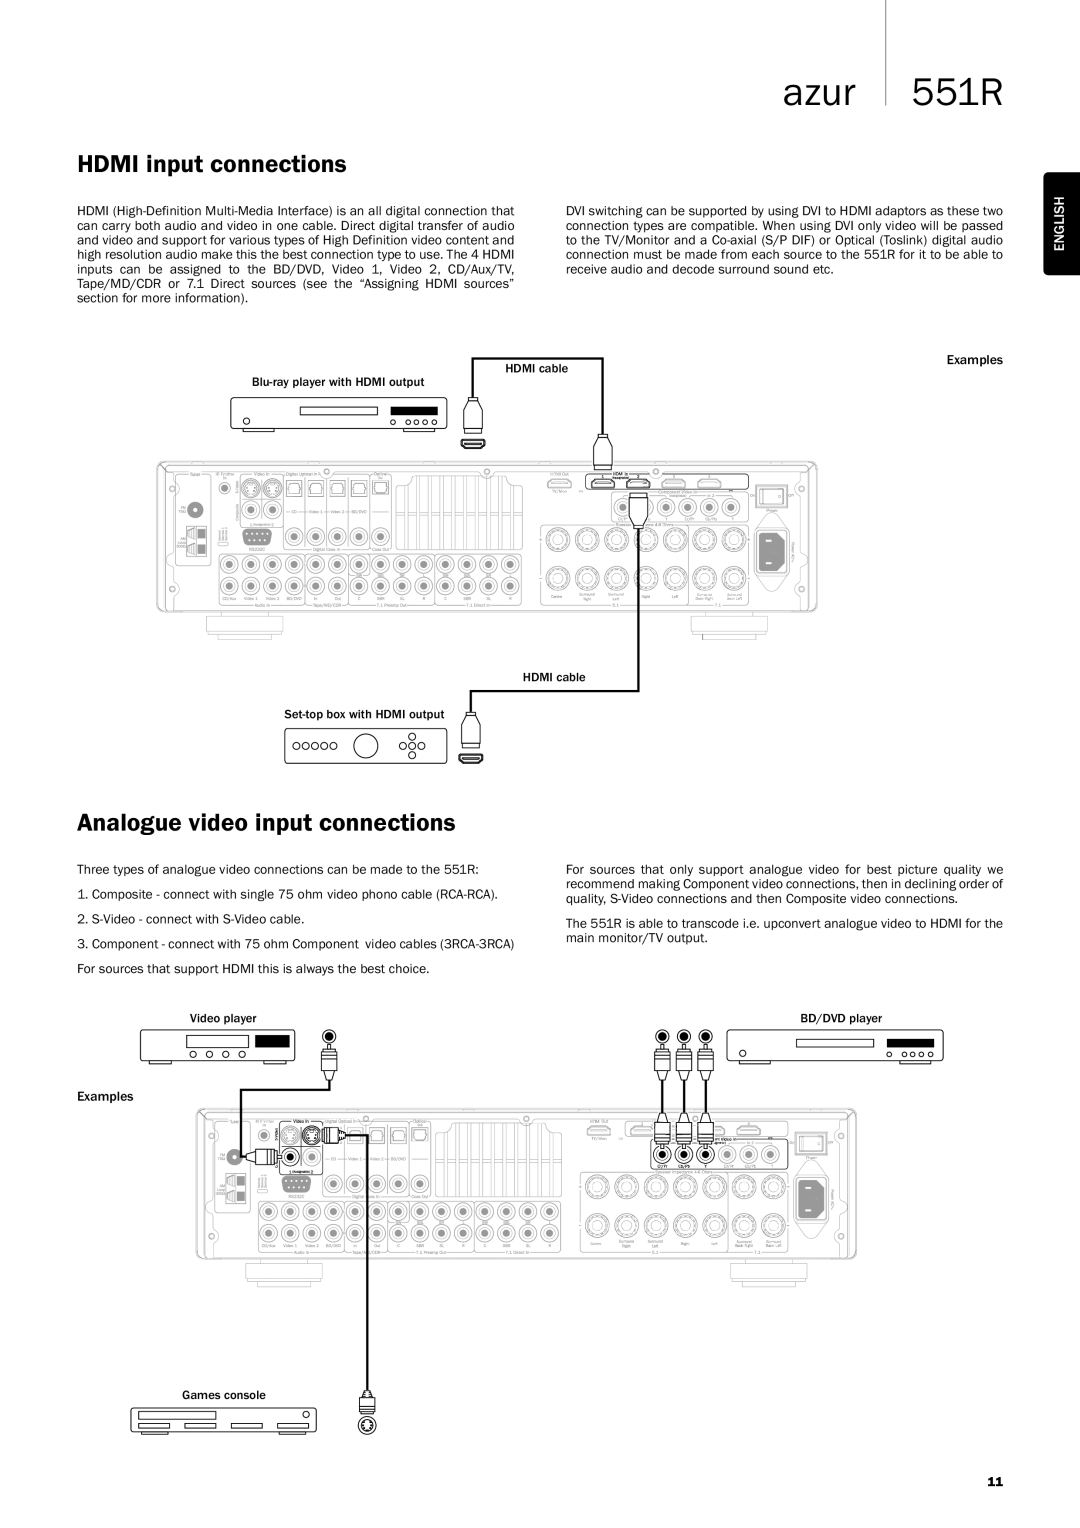 Cambridge Audio user manual HDMIinputconnections, Analoguevideoinputconnections, azur 551R, English, Examples 